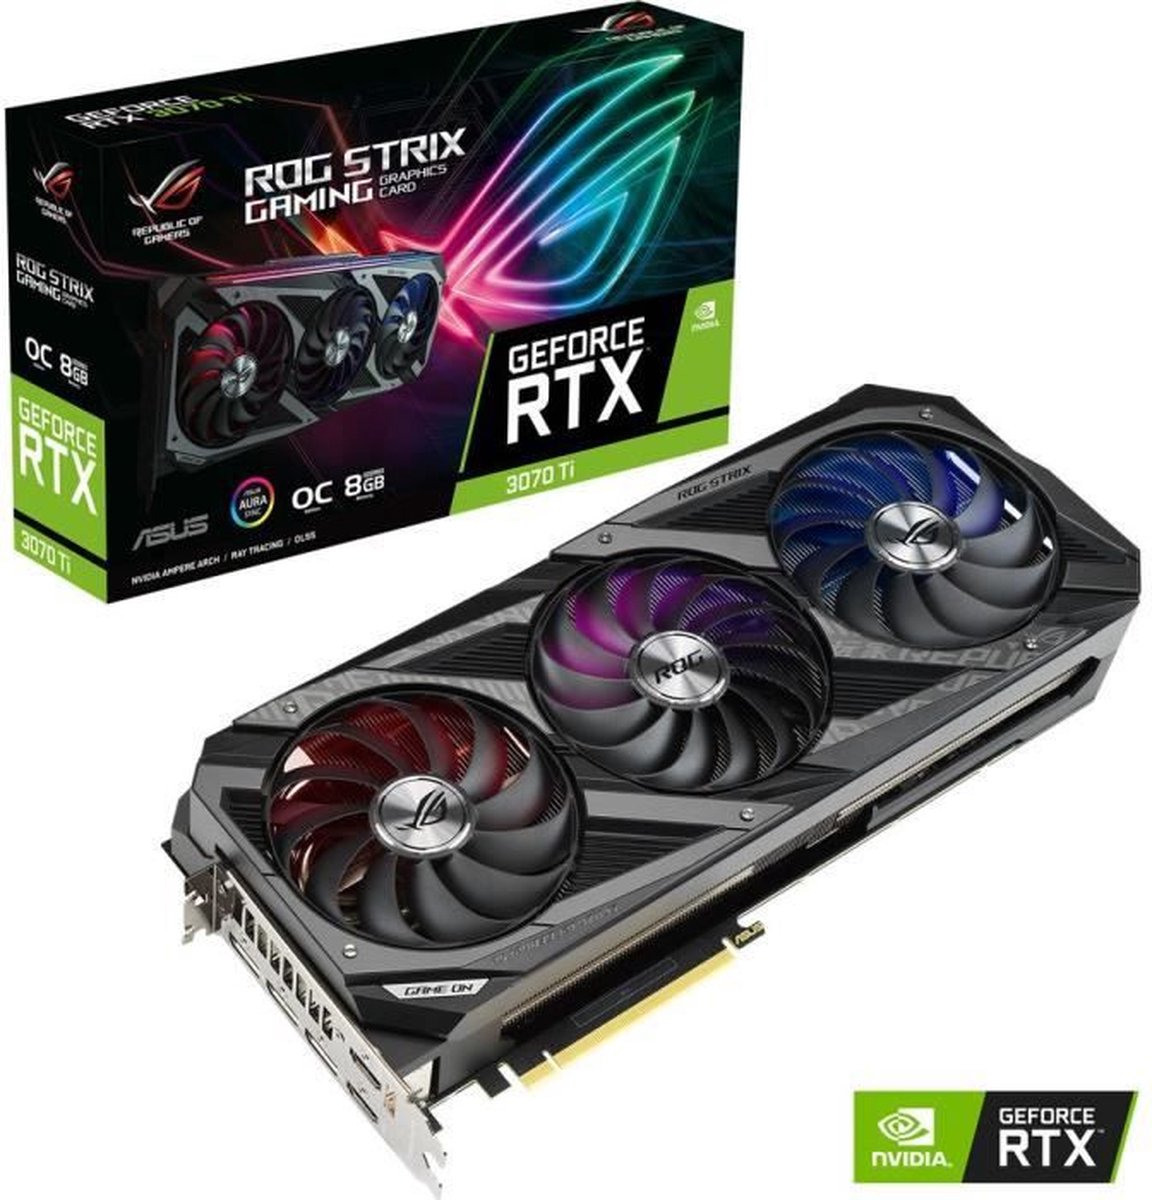 Asus ROG Strix GeForce RTX 3070 Ti OC Edition